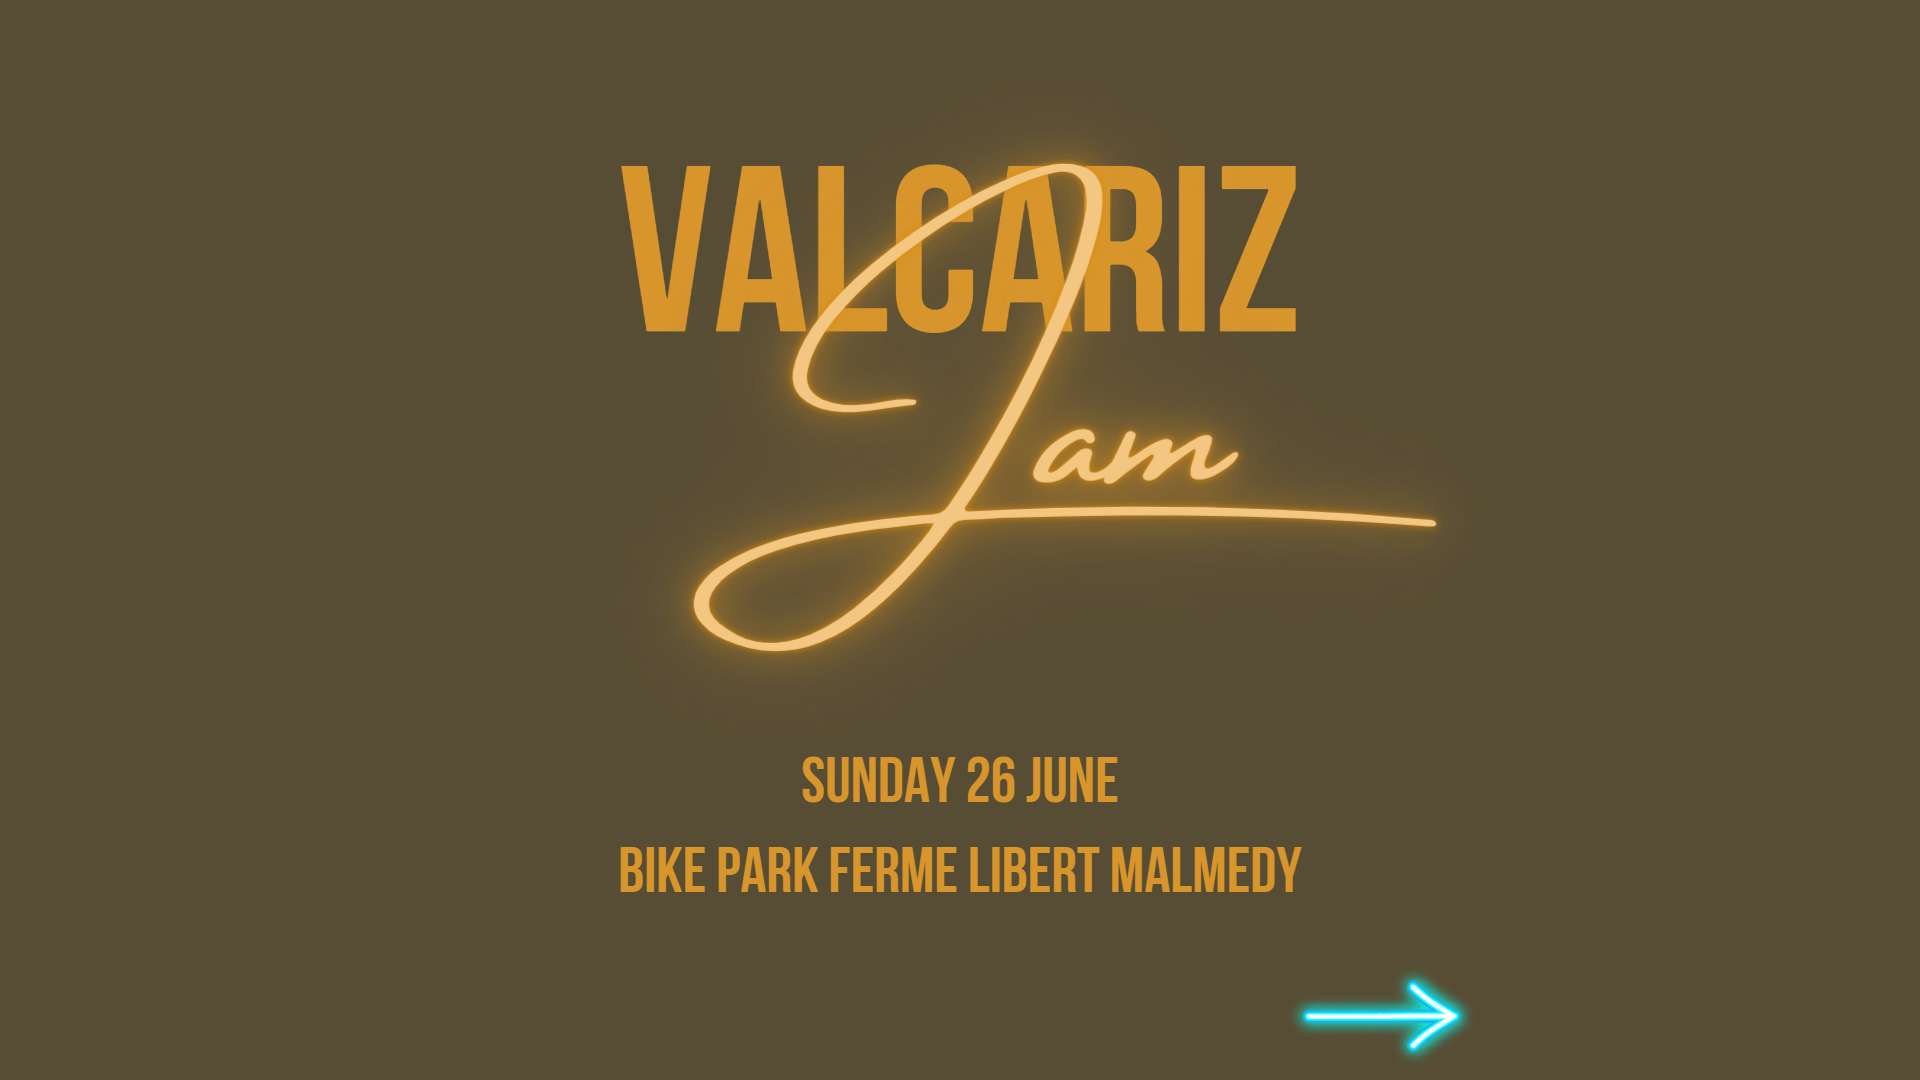 Valcariz Jam Bike Park Ferme Libert Malmedy